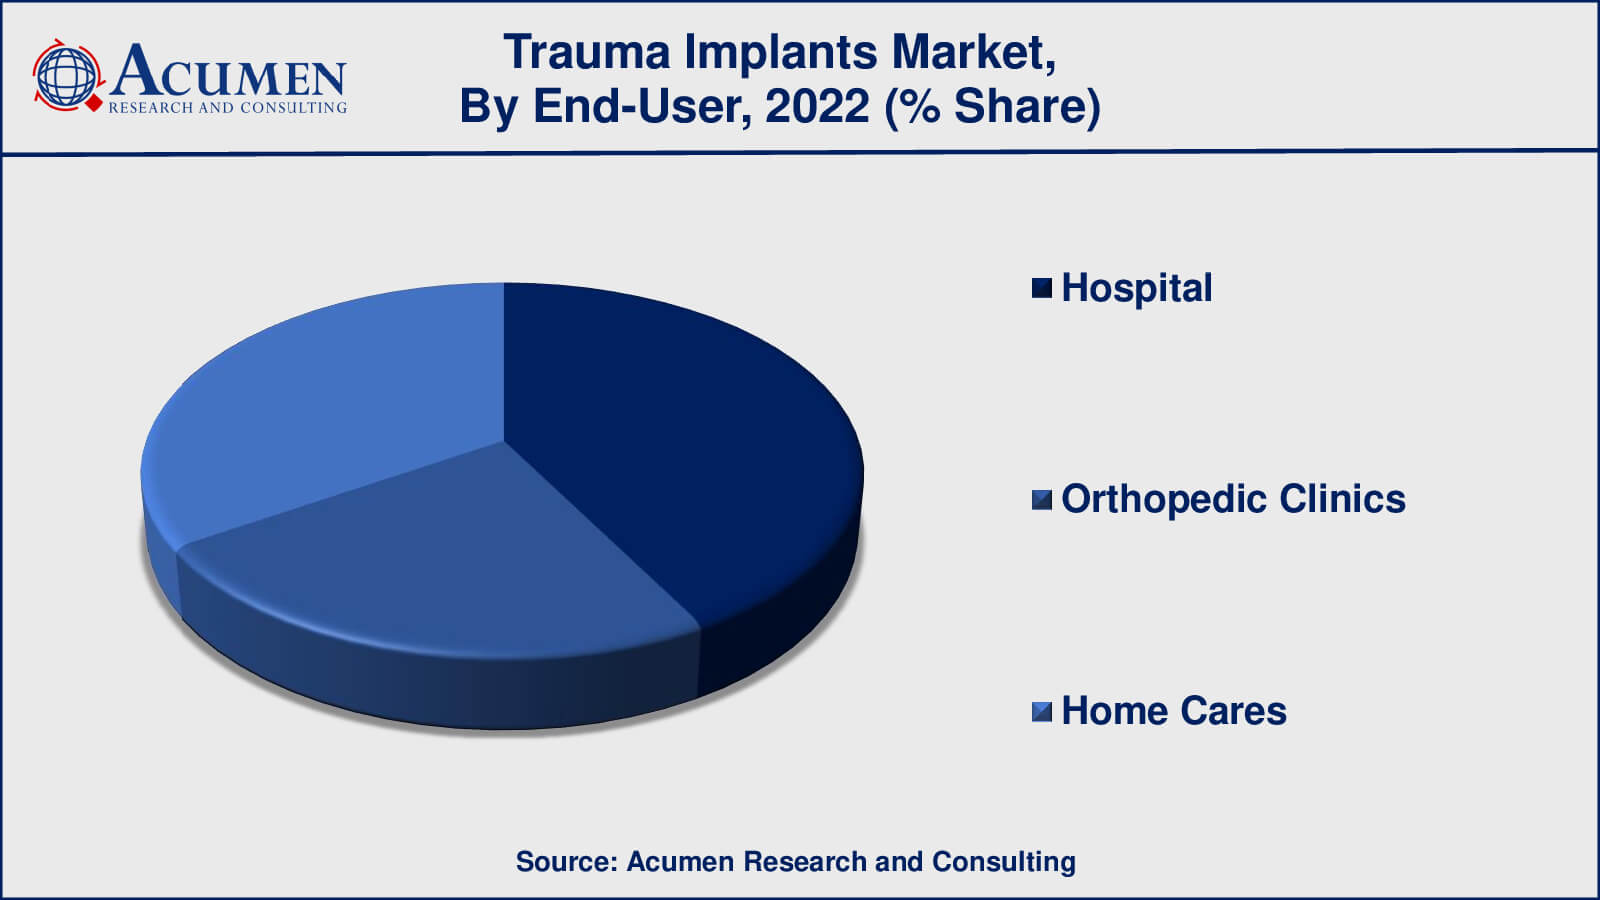 Trauma Implants Market Drivers